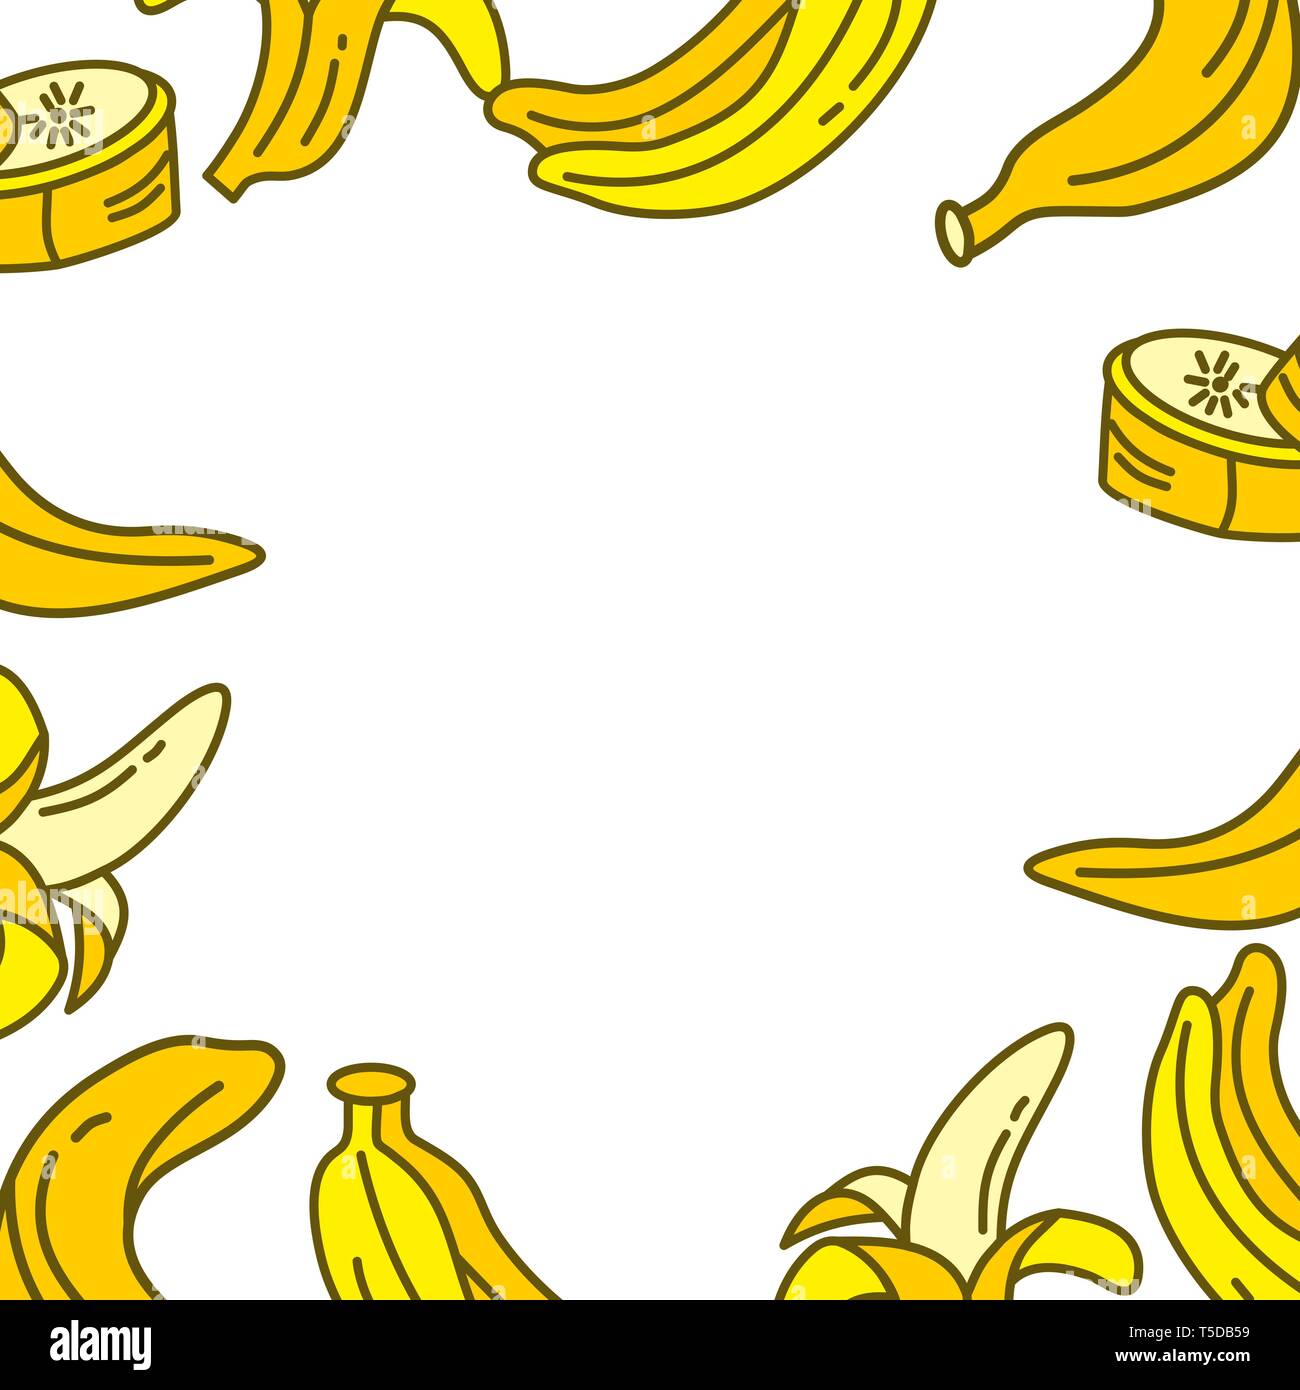 Banana Fruit Frame Empty Template Vector Stock Vector Image & Art - Alamy